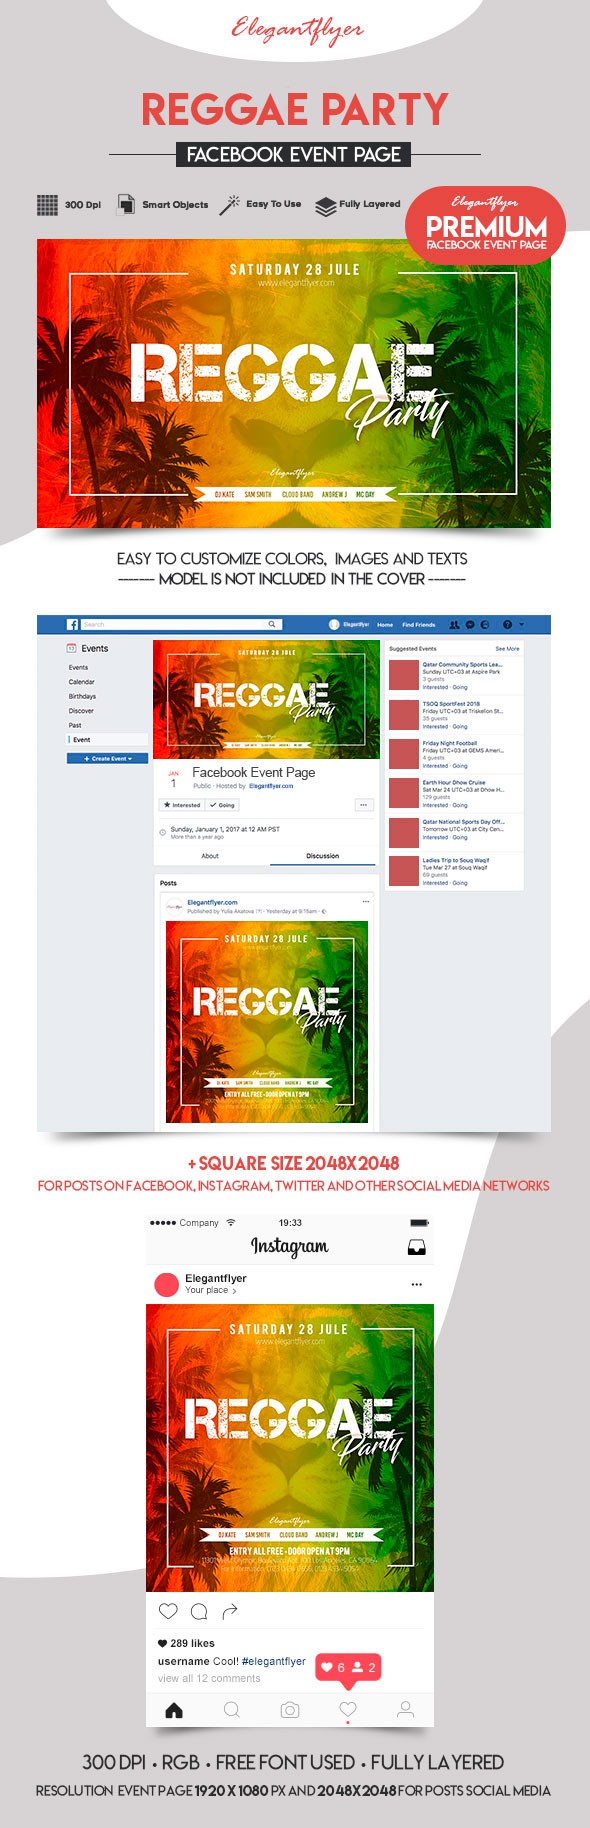 Fiesta de Reggae en Facebook by ElegantFlyer